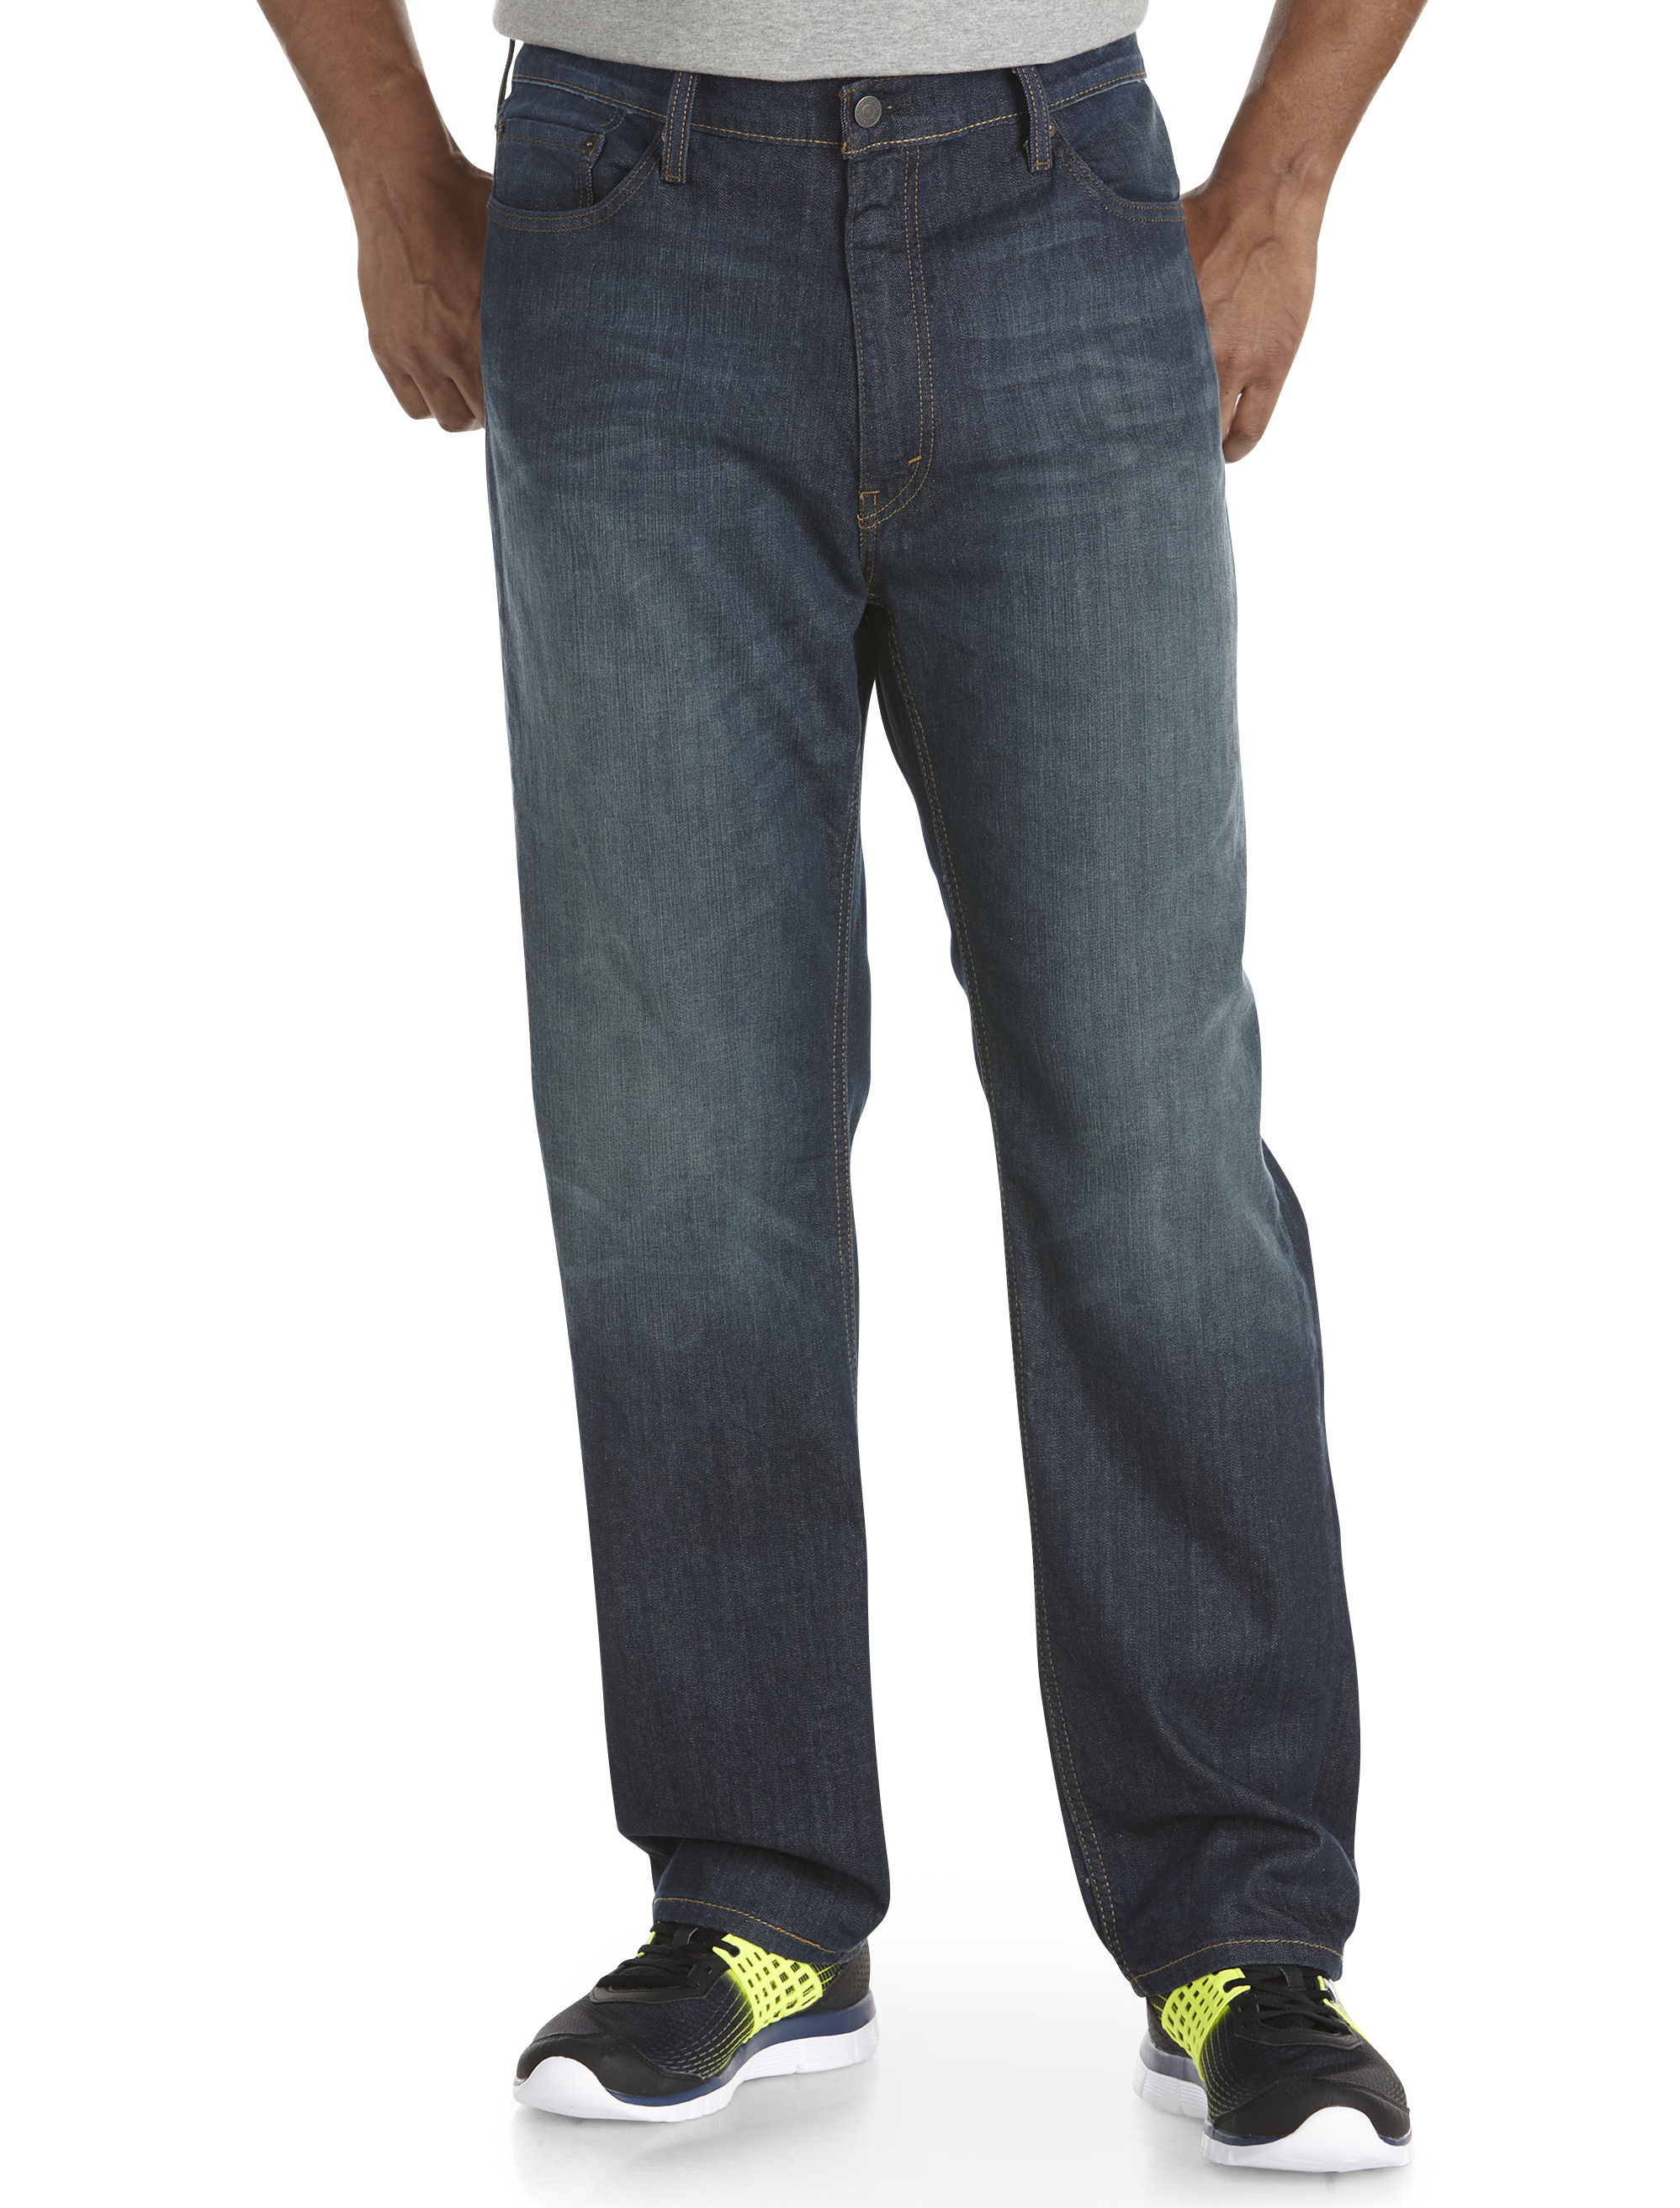 Big + Tall | Levi's 541 Athletic-Fit Stretch Jeans | DXL